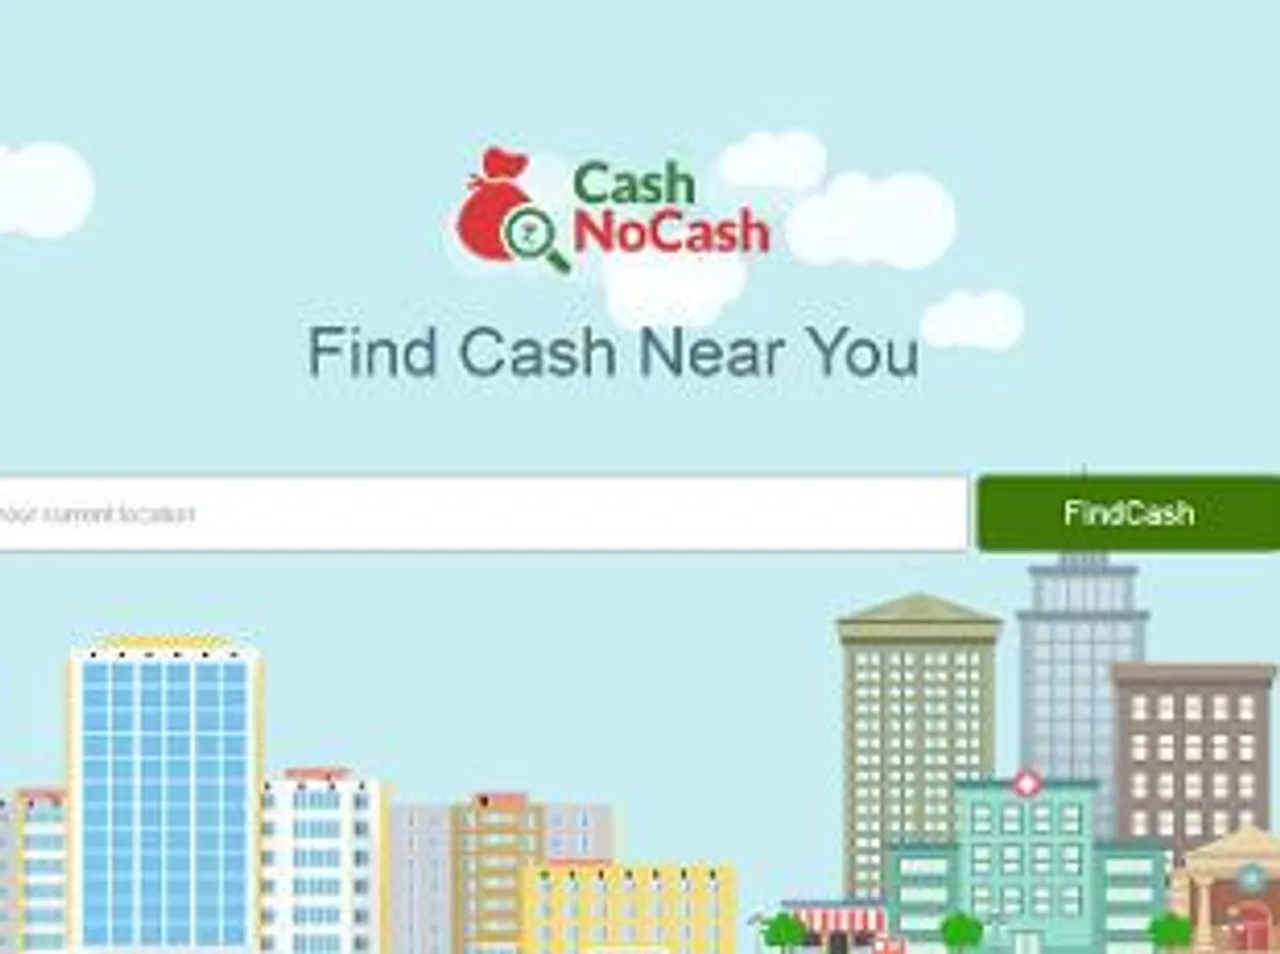 CashNoCash.com launched to help Cash-Strapped citizens